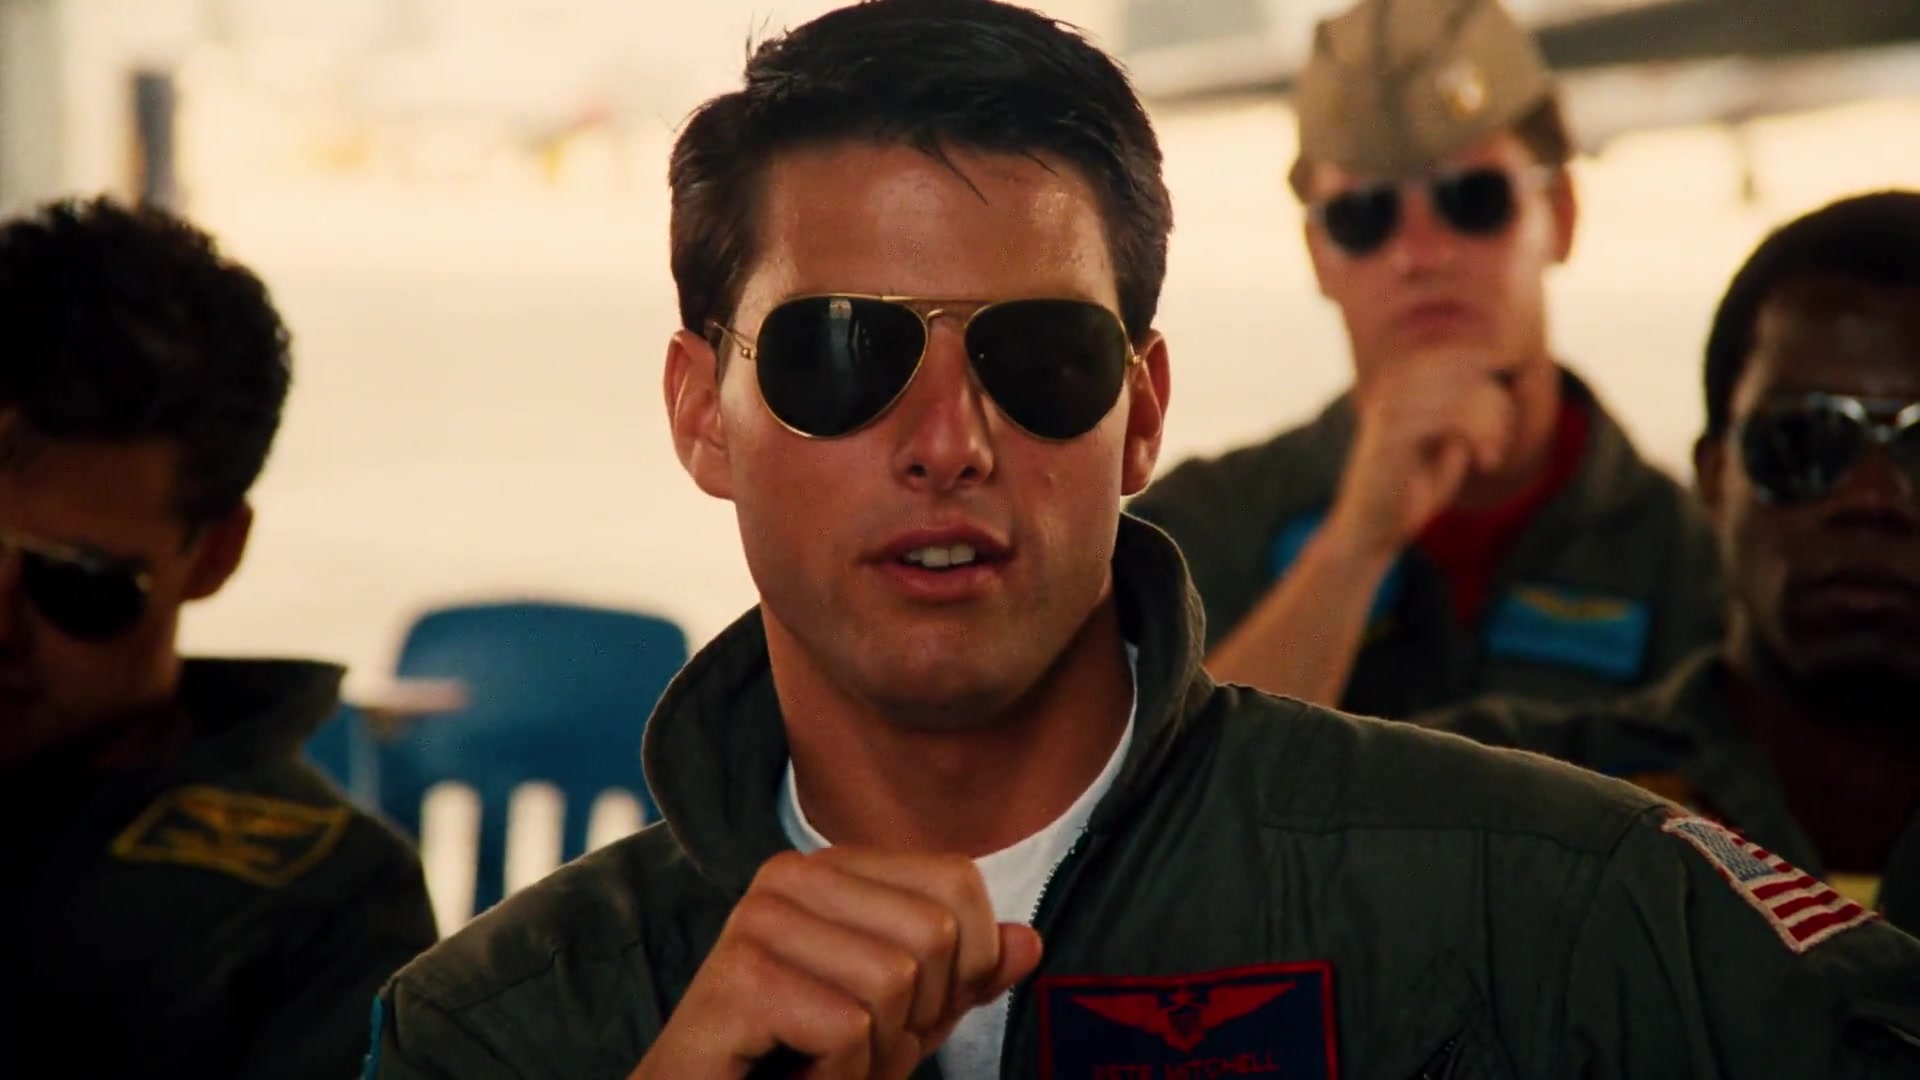 Ray-Ban Aviator 3025 Sunglasses Worn By Tom Cruise As Pete “Maverick”  Mitchell In Top Gun (1986)